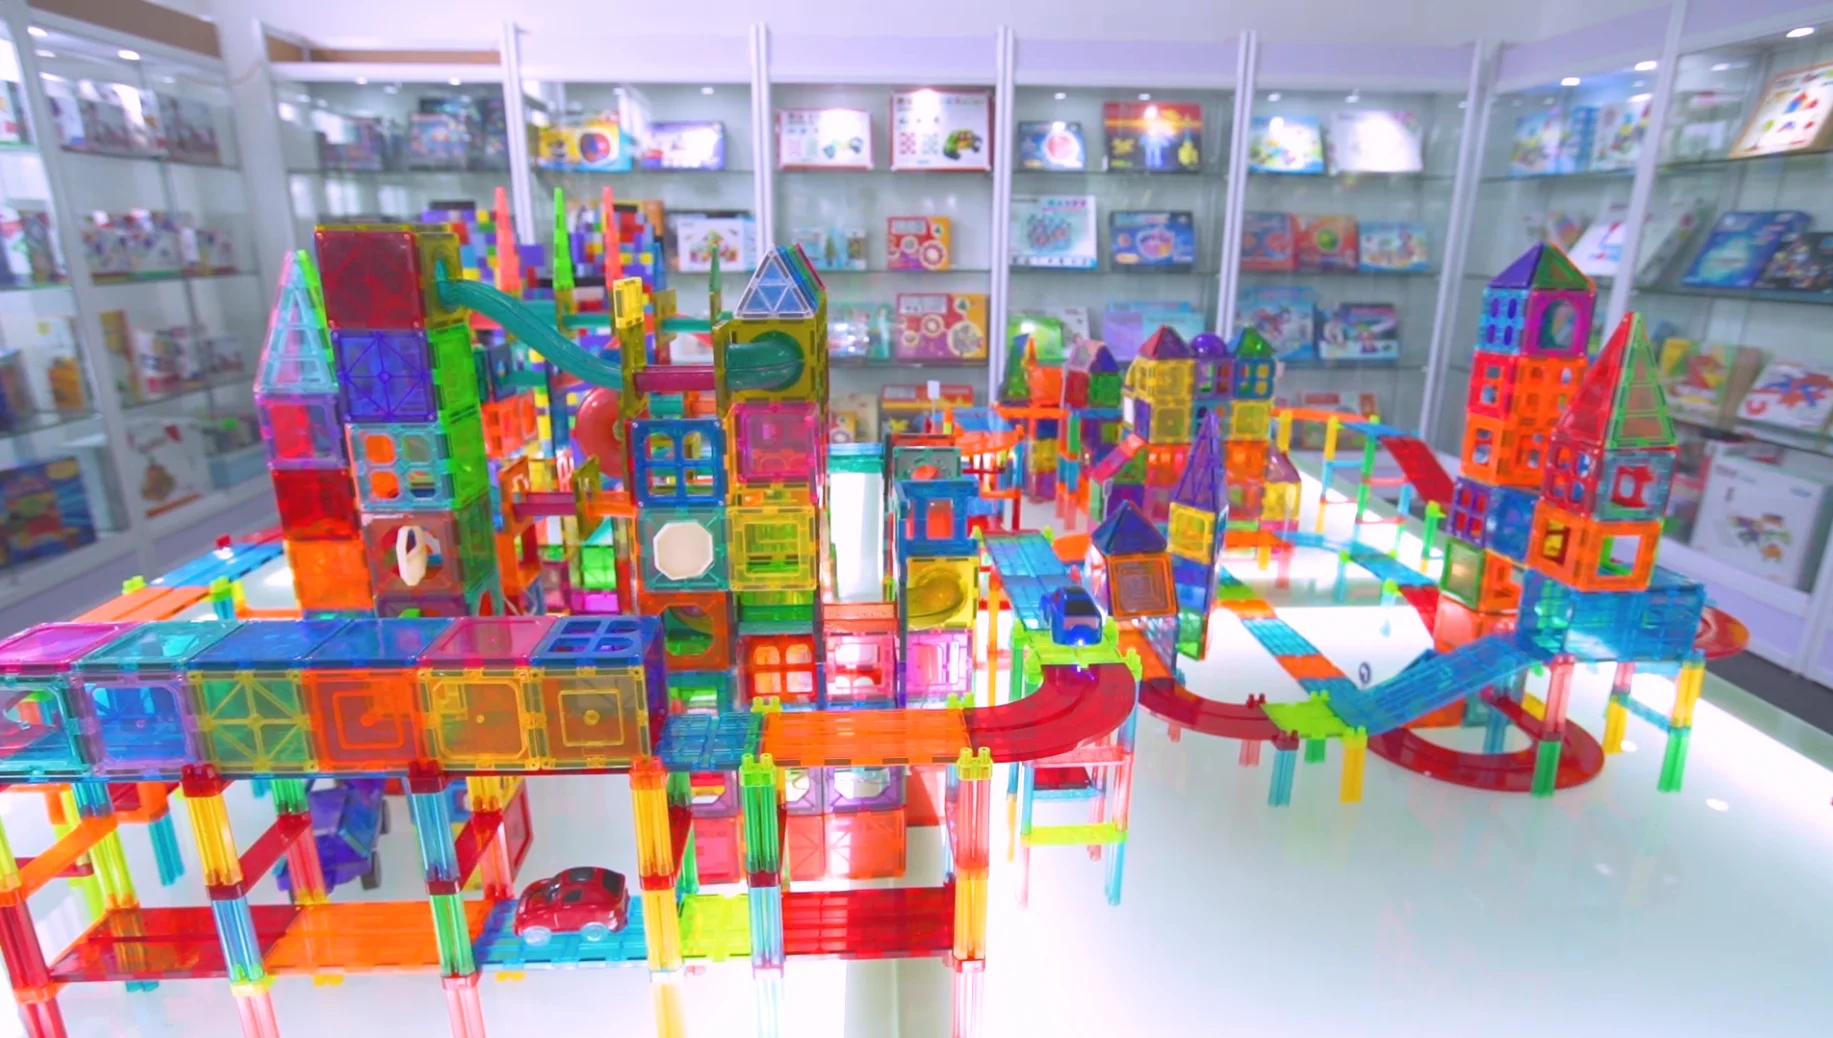 Online hot sale magnet building tiles magnetic blocks toys for child wholesale hot toys&baby games magna tiles educational